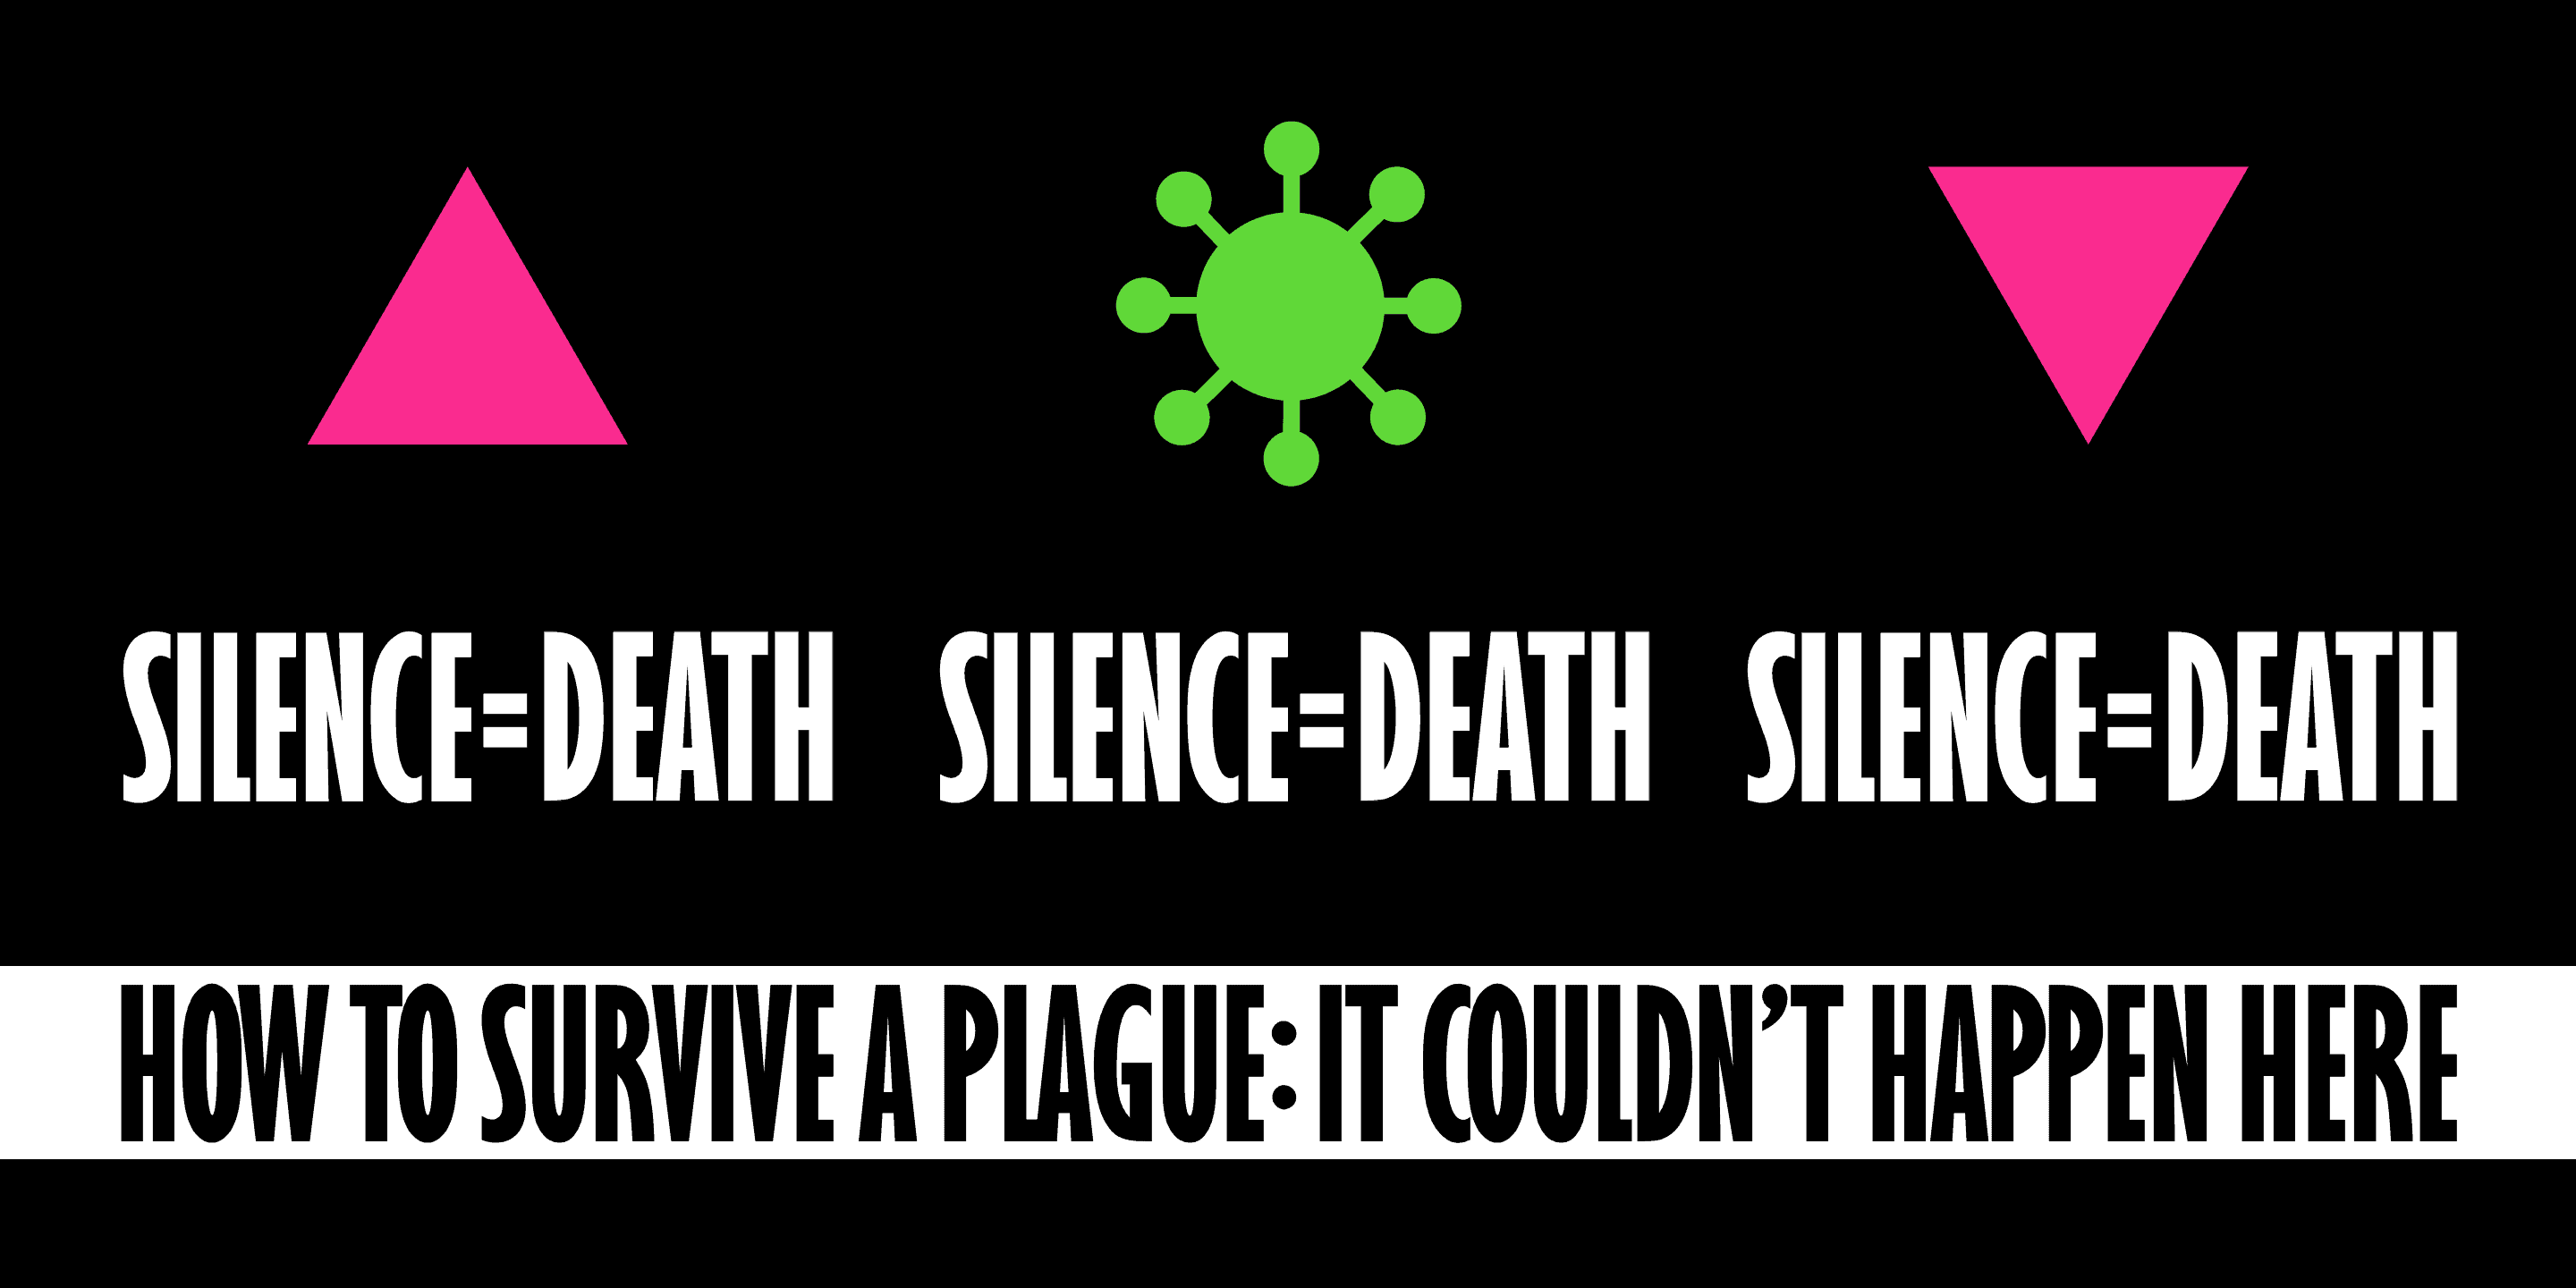 RC 341: How To Survive A Plague Part 1: It Couldn’t Happen Here